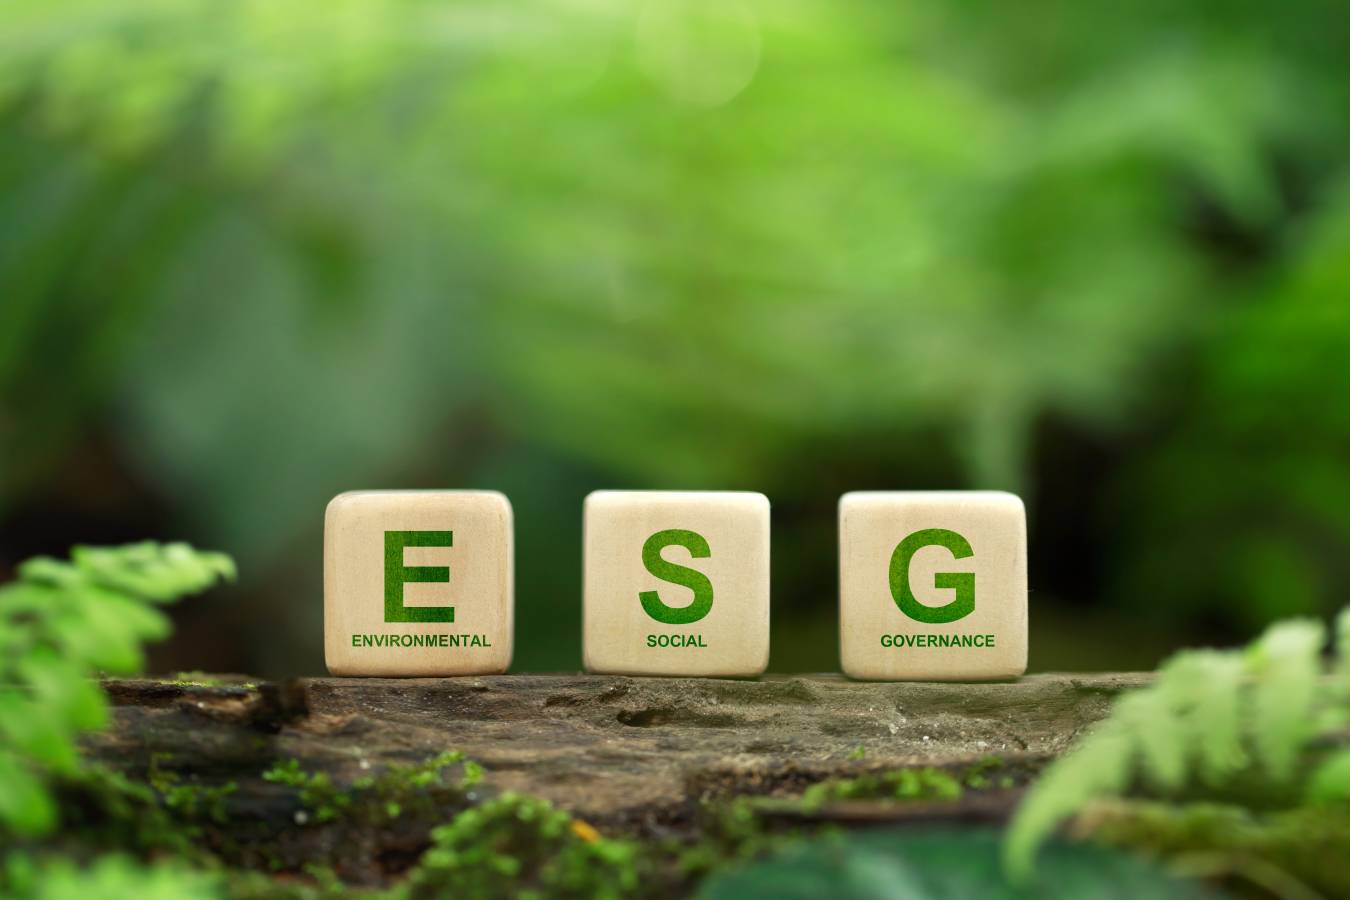 esg-concept-environmental-social-governance-sustainable-corporation-development-words-esg.jpg